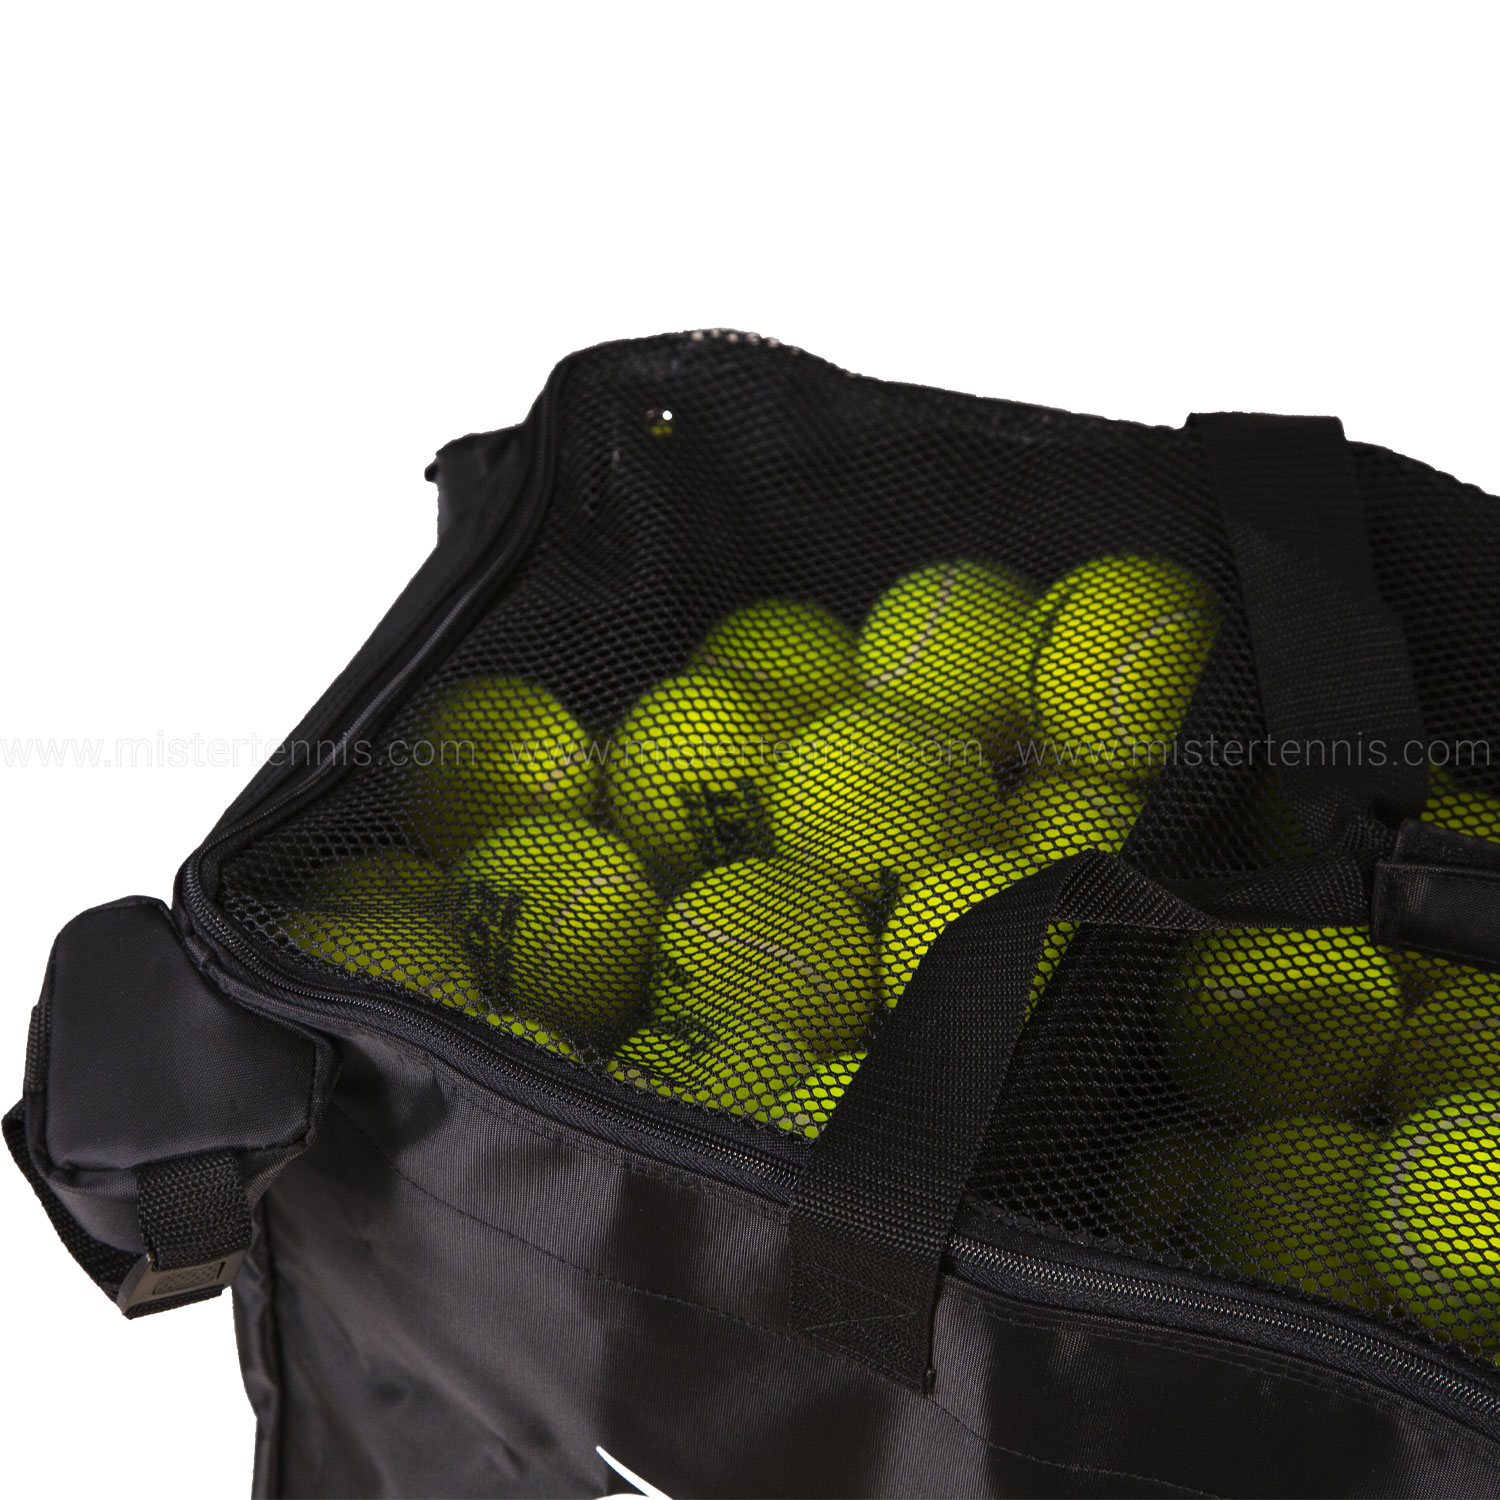 Dunlop Teaching x 250 Cart Balls Bag - Black